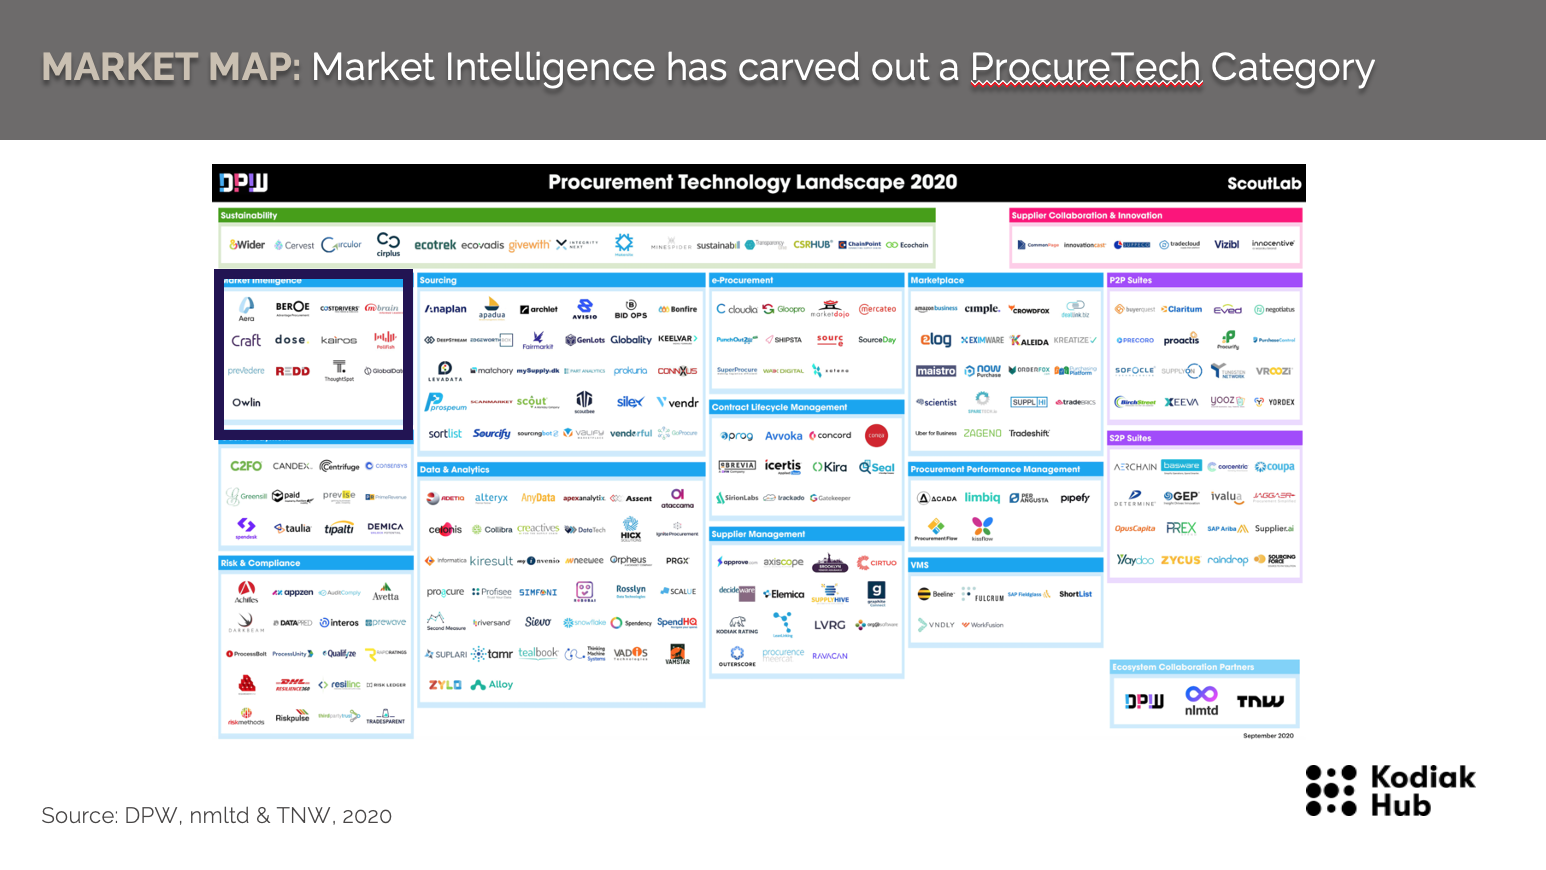 Better Market Intelligence: Procurement Technology Landscape